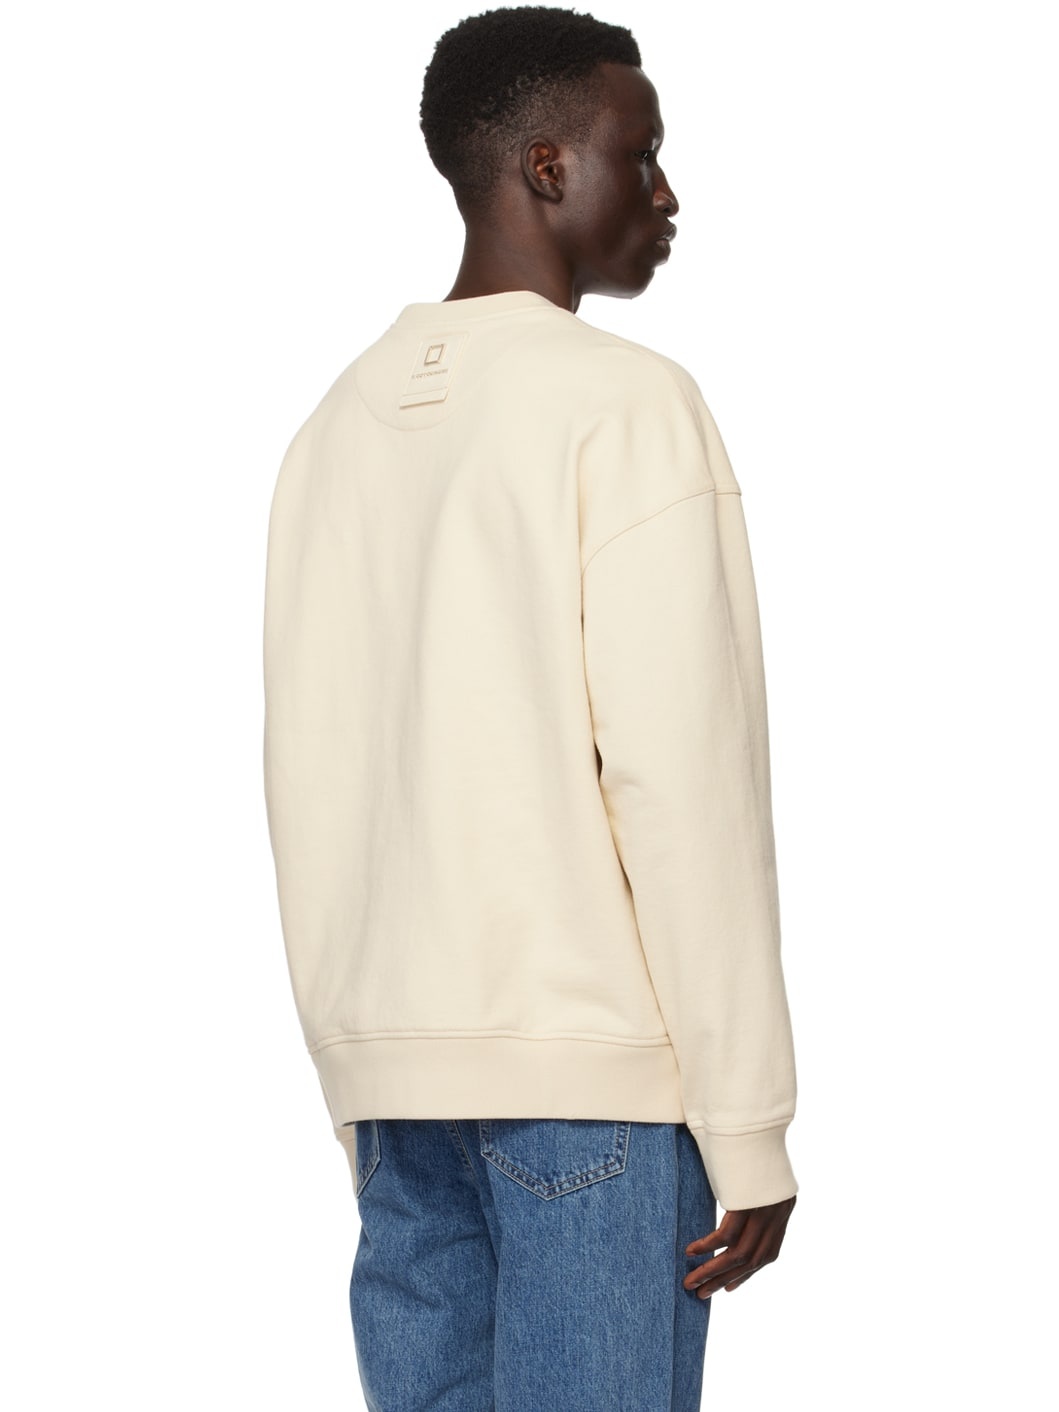 Off-White Patch Sweatshirt - 3